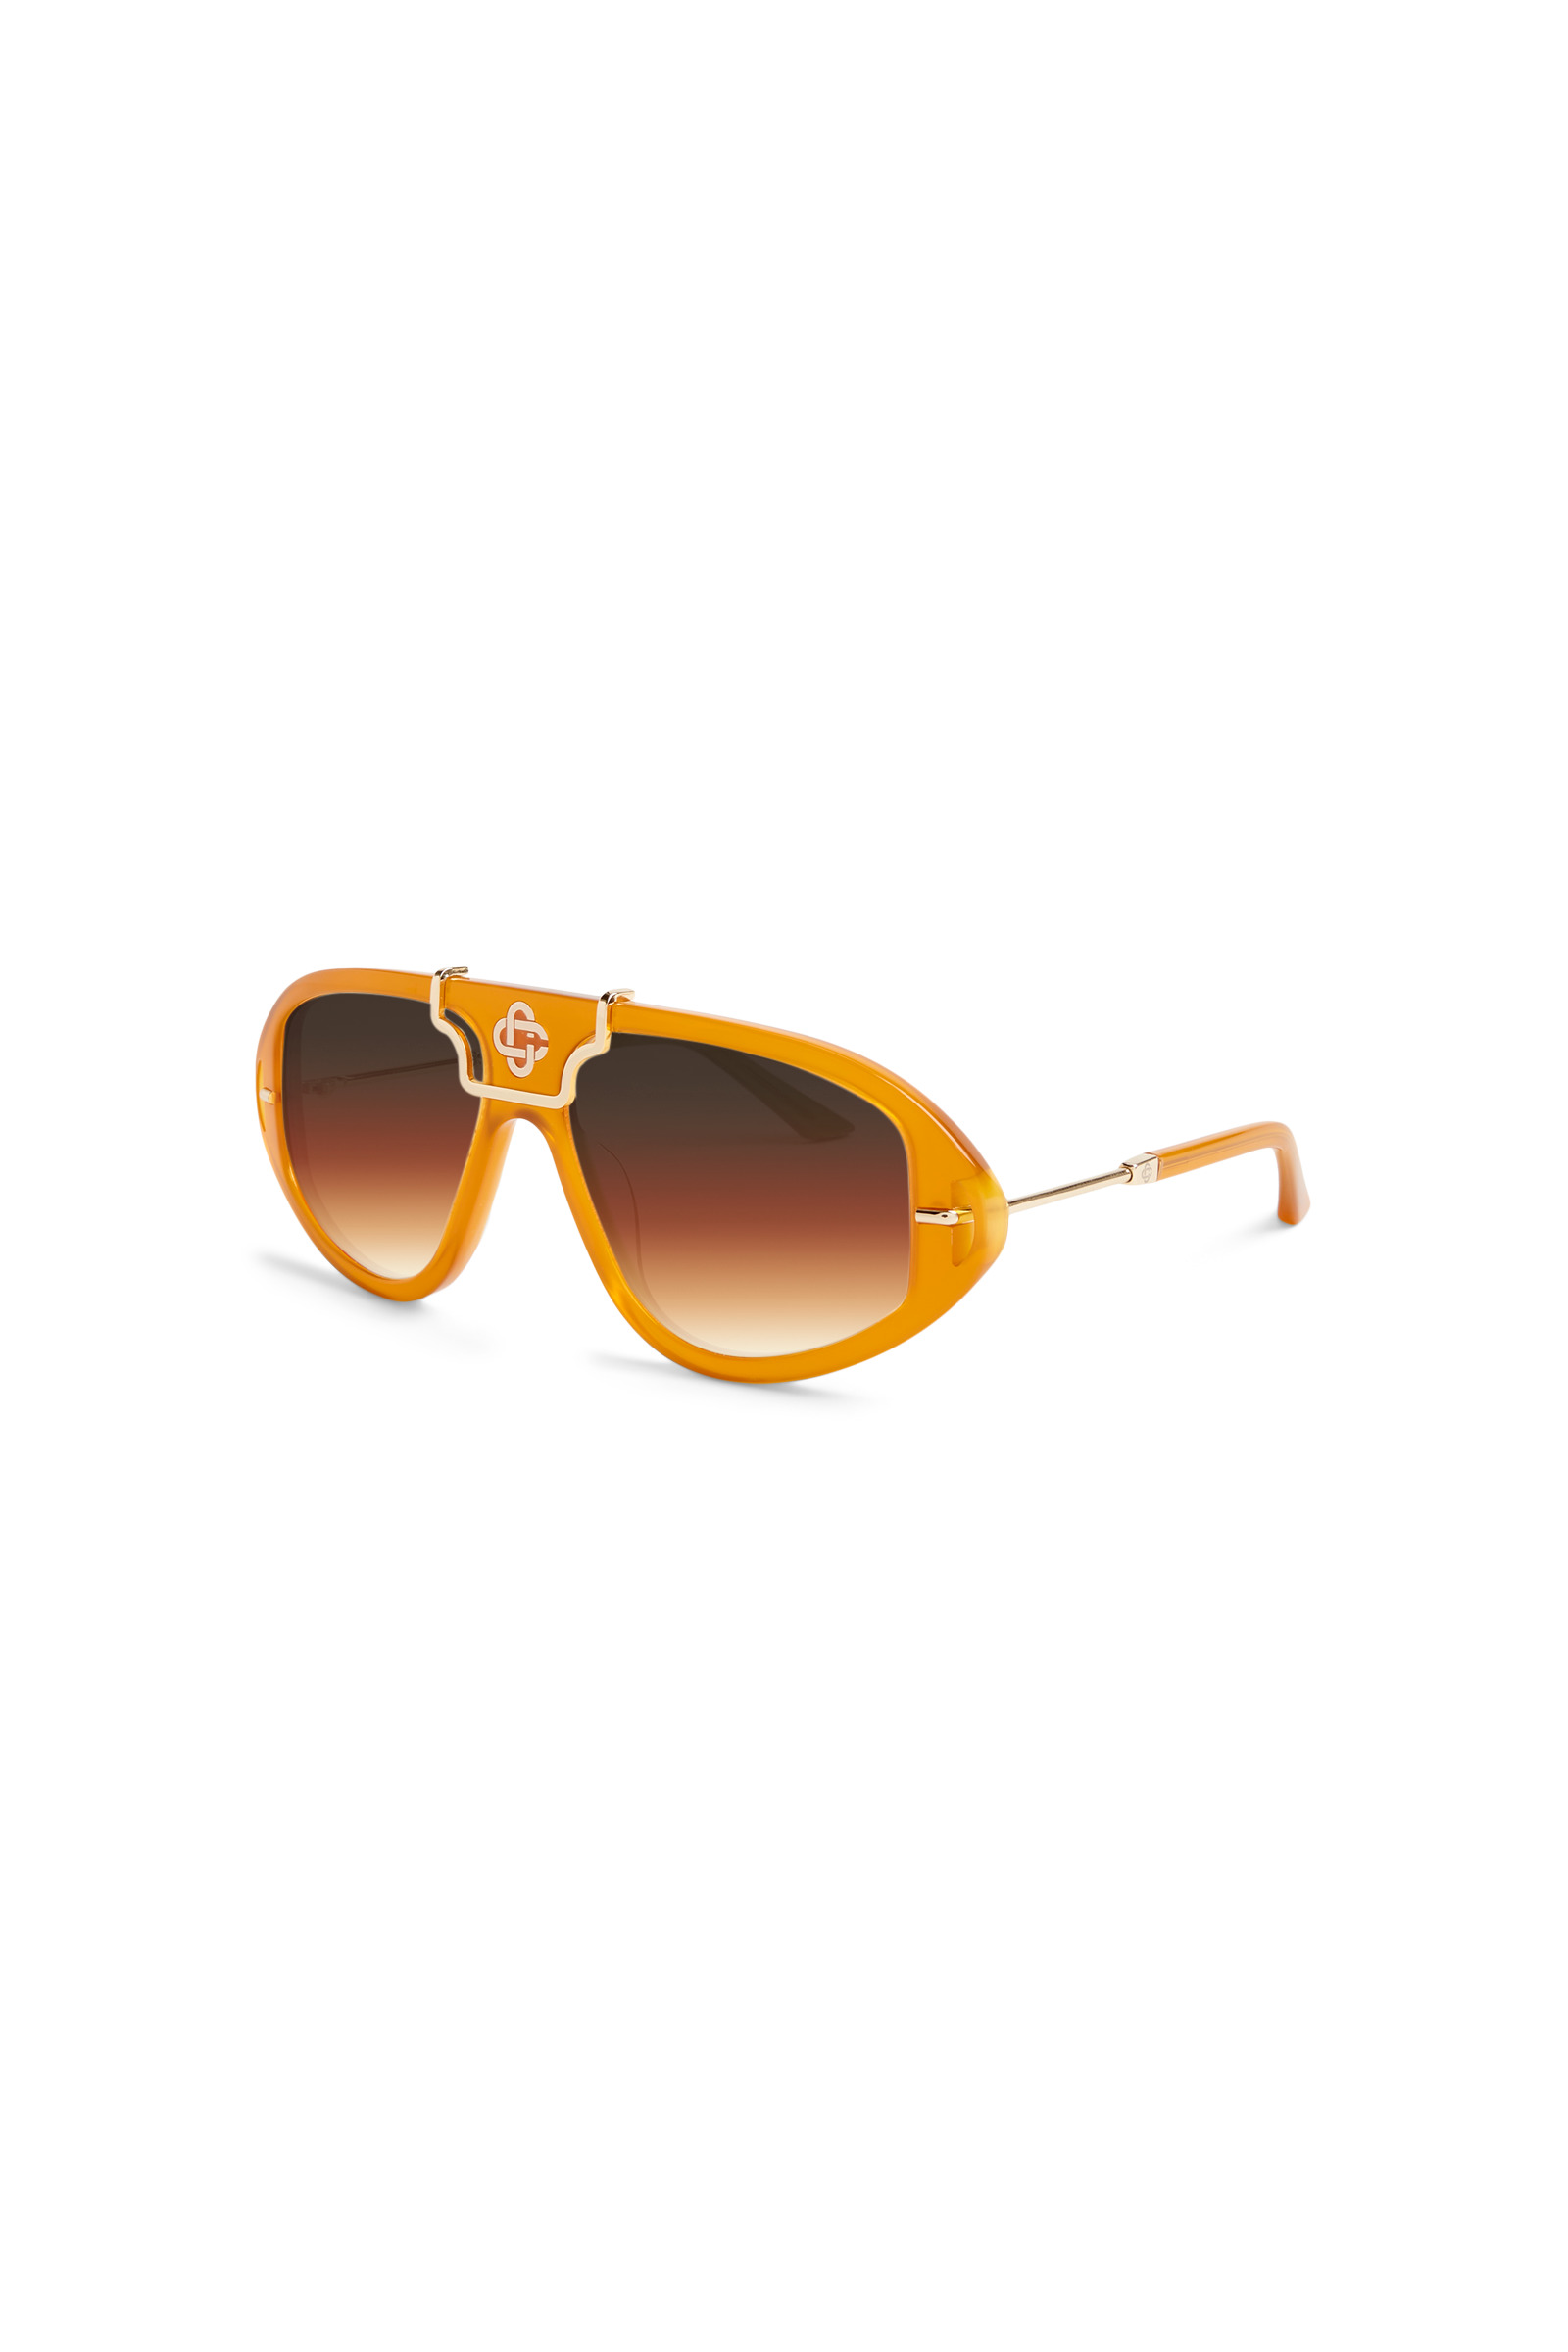 Orange & Gold The Hacienda Sunglasses - 1